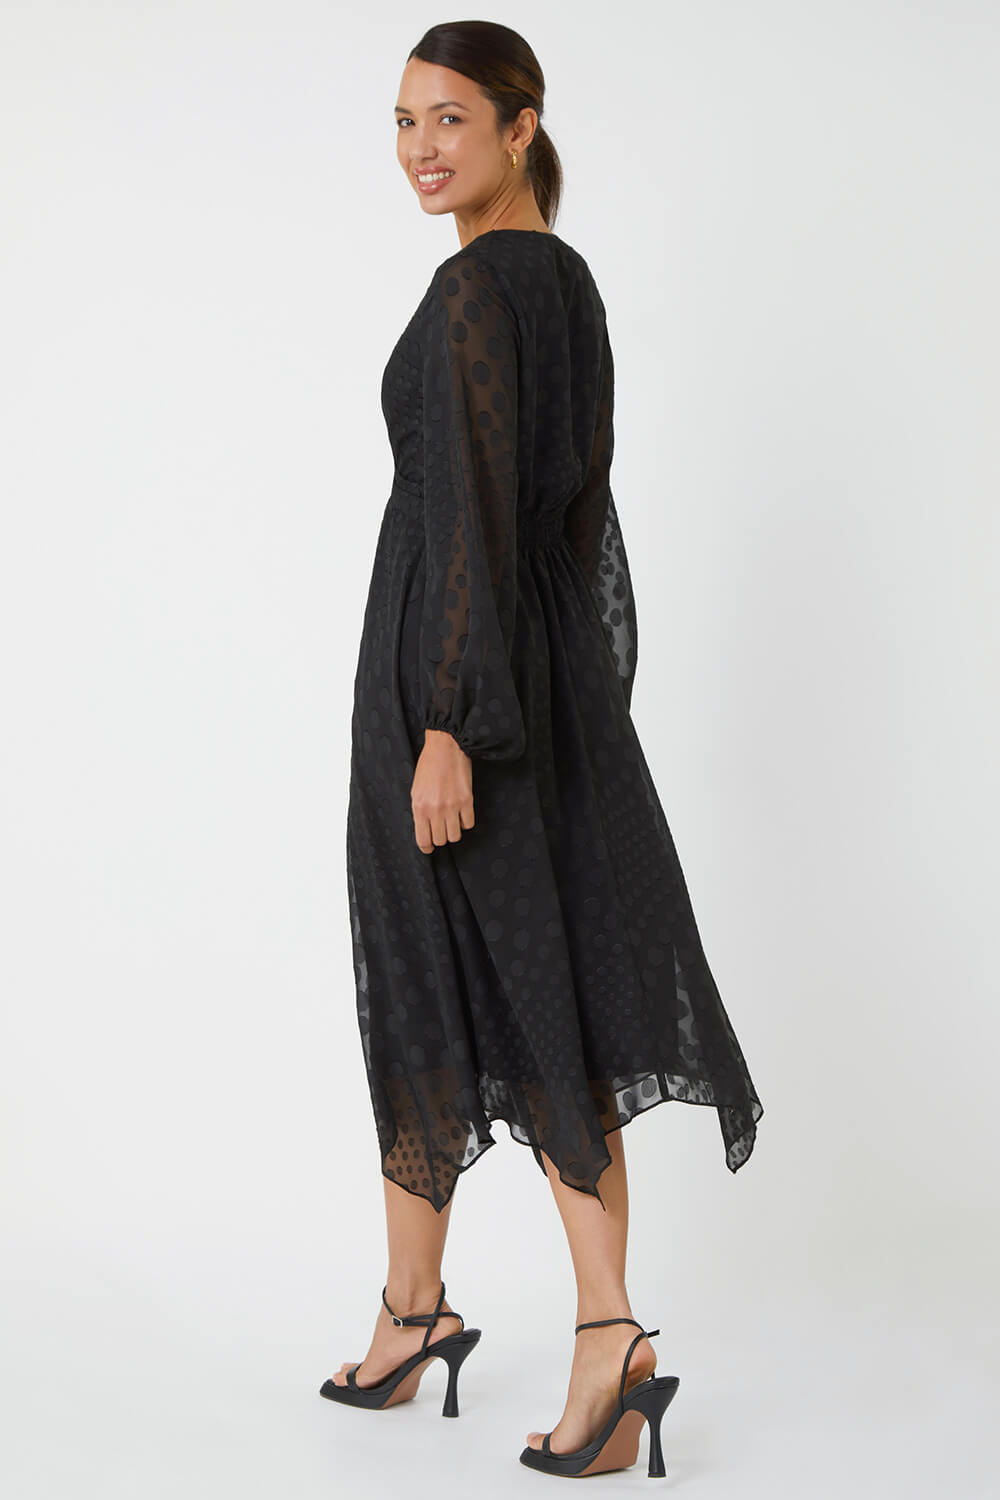 Black Polka Dot Twist Detail Chiffon Dress, Image 3 of 5